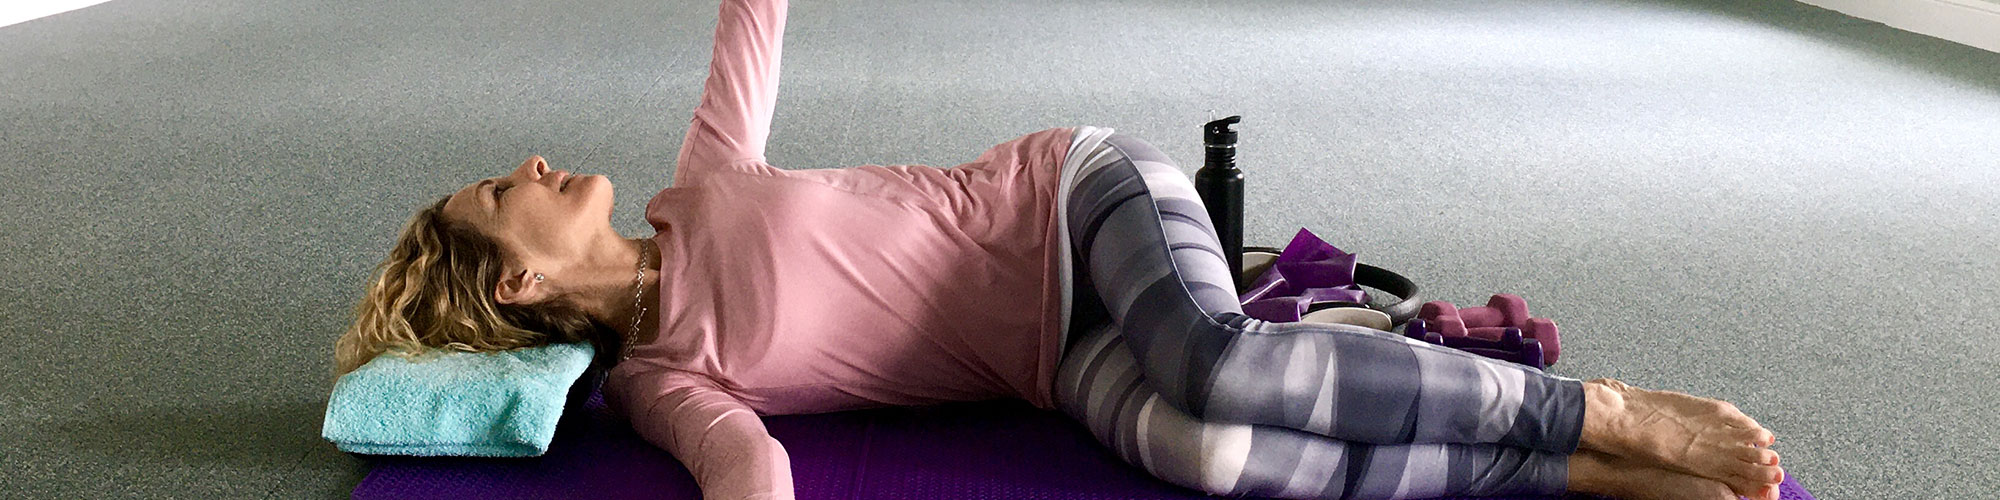 Yoga stretch at Wrexham based class